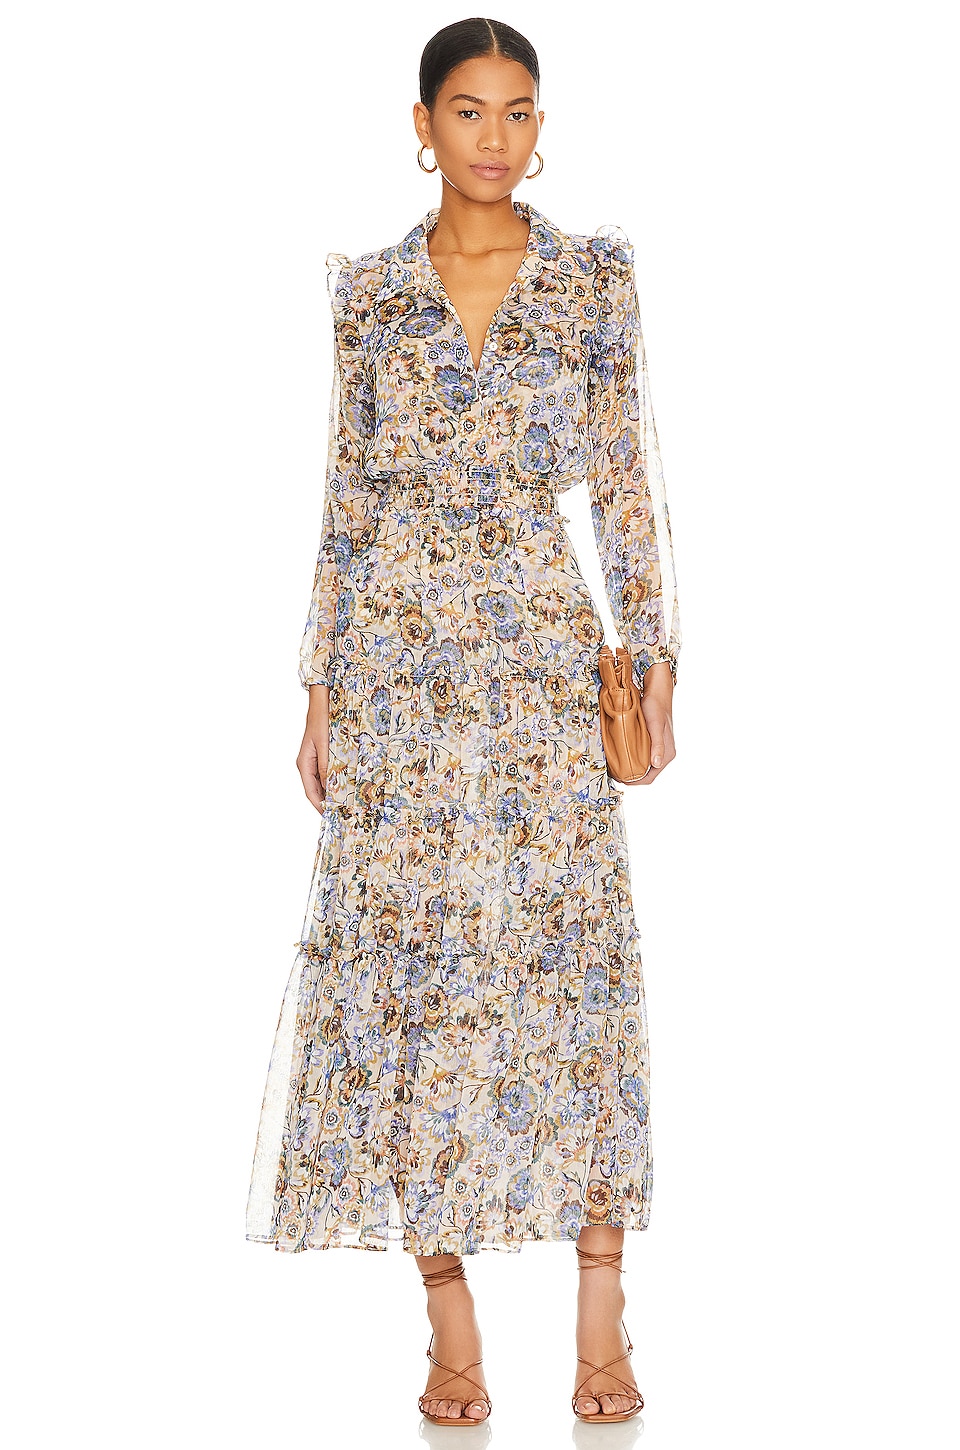 MISA Los Angeles Ahreana Dress in Sketched Floral | REVOLVE